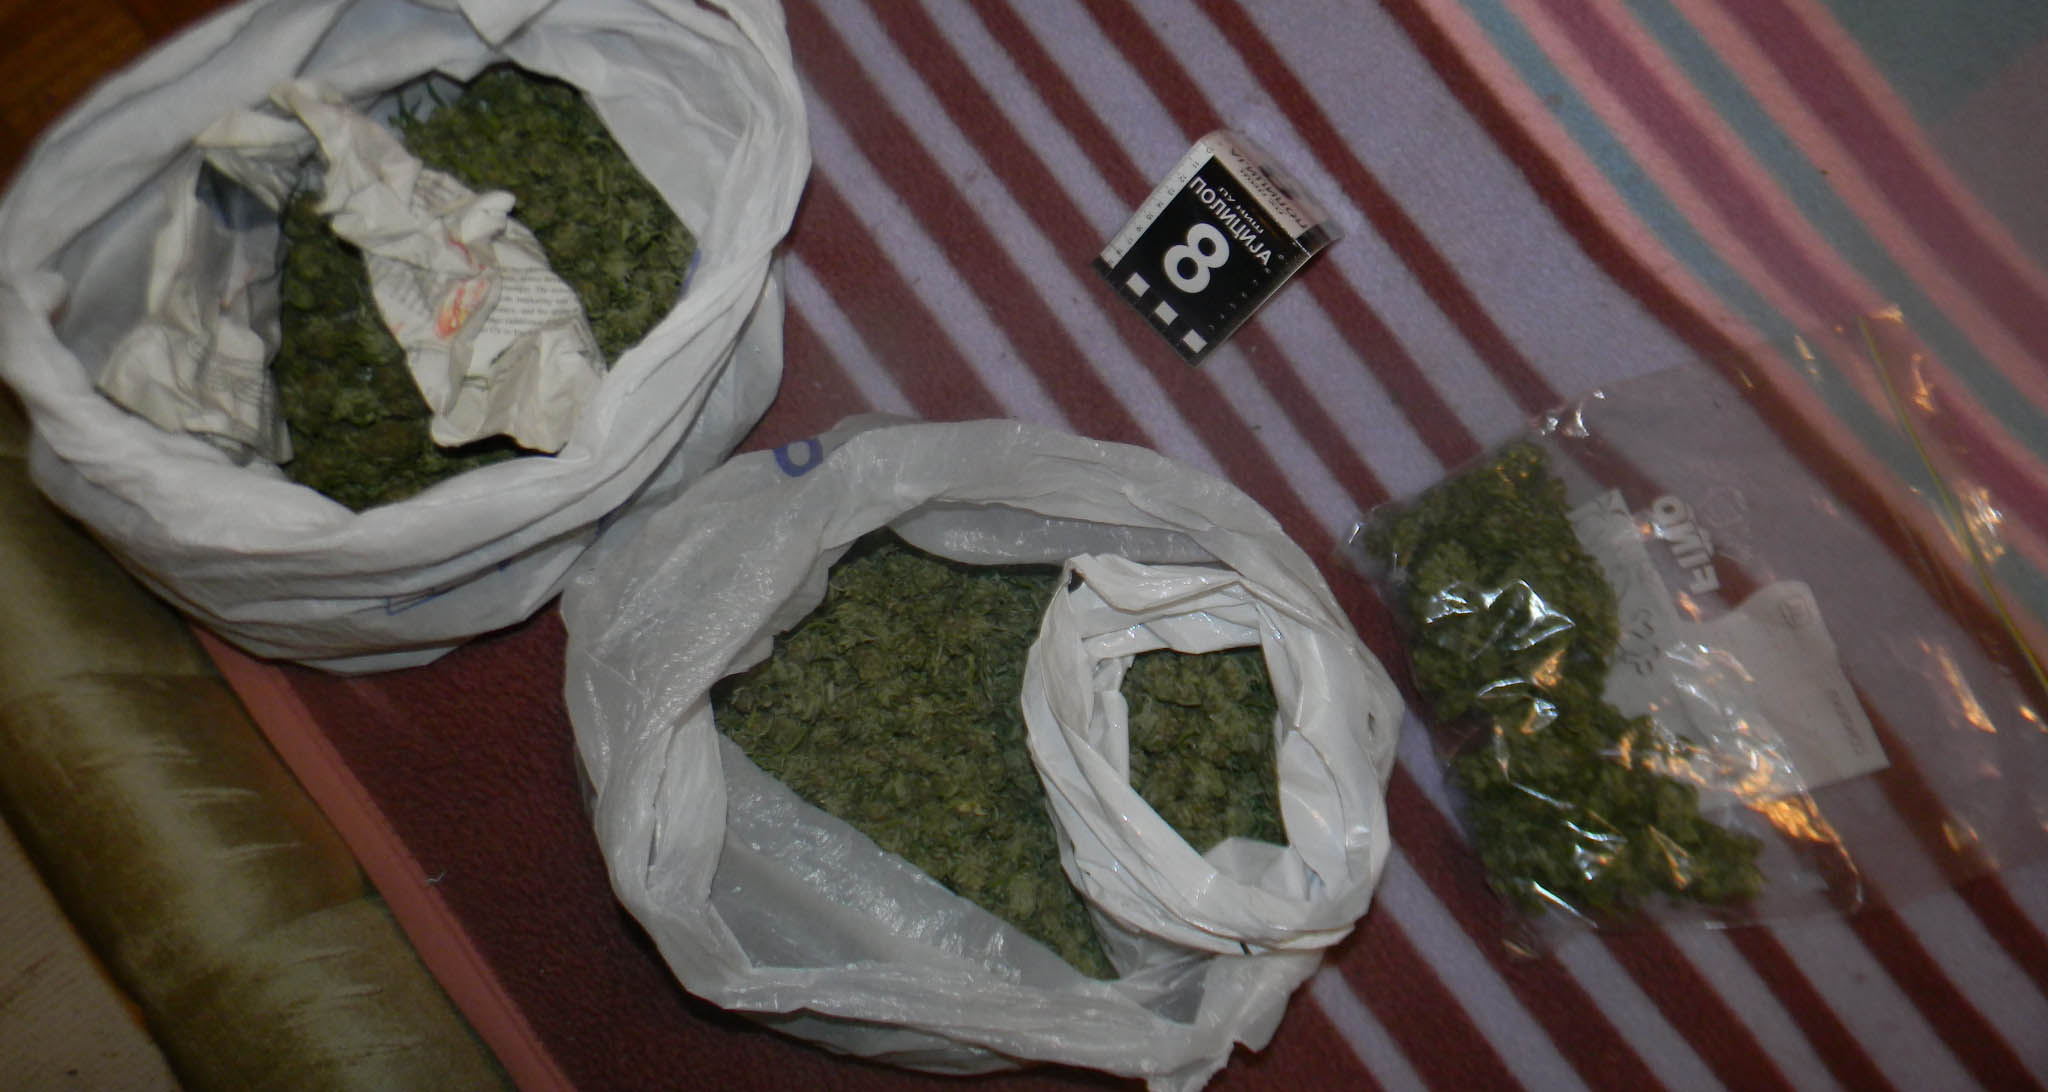 Zaplenjeno oko 24 kilograma marihuane